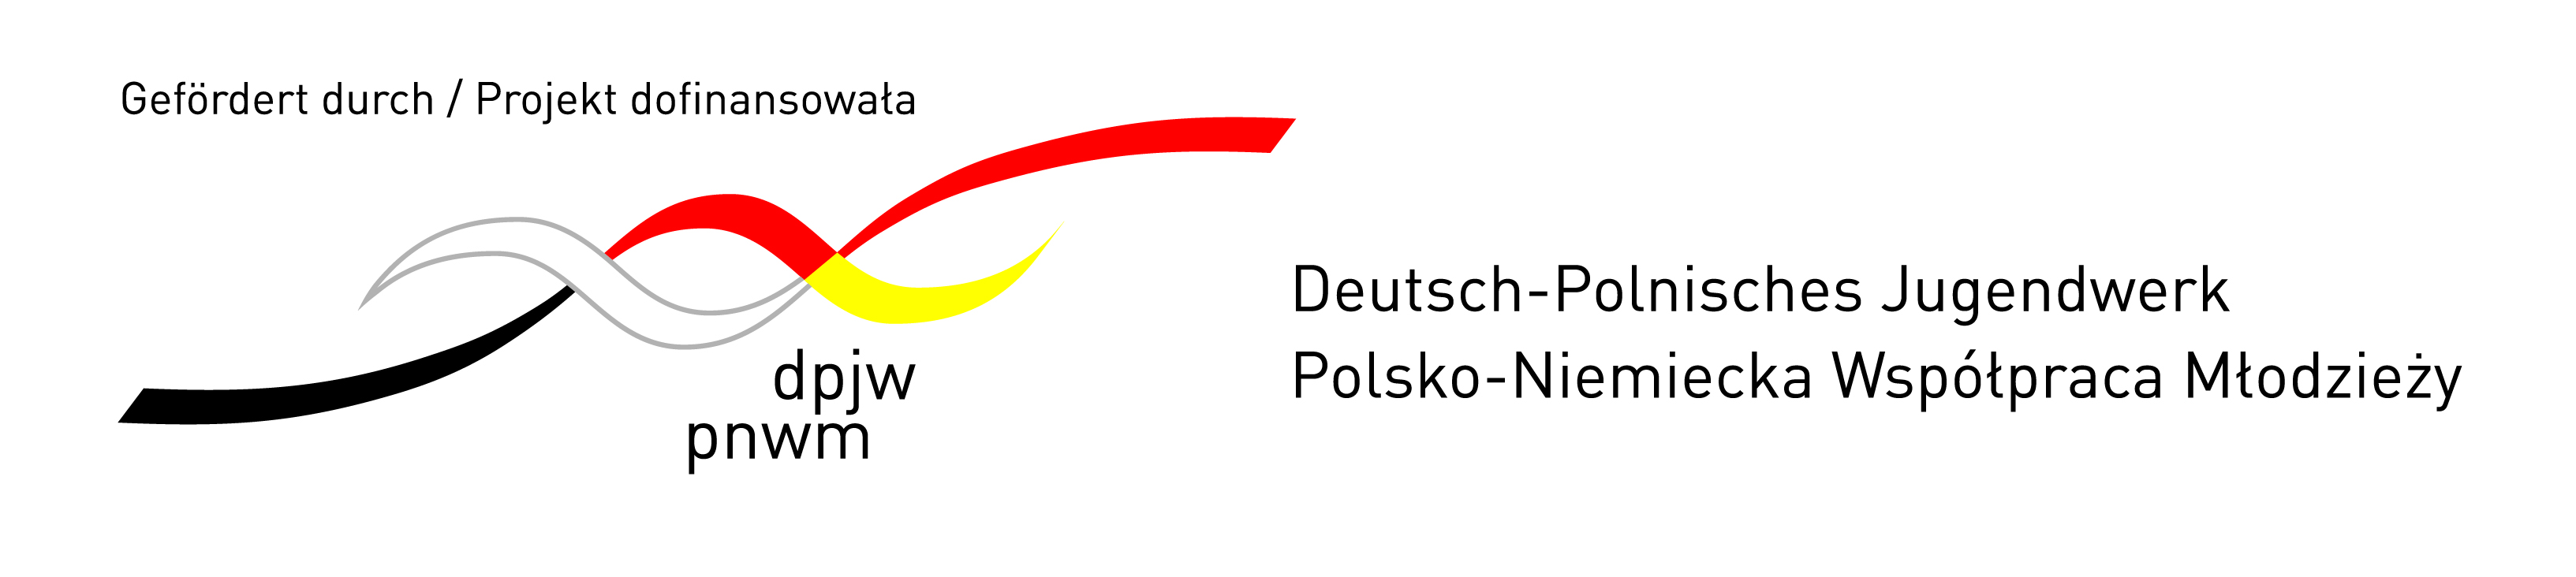 logo_dpjw_flach_4c.jpg